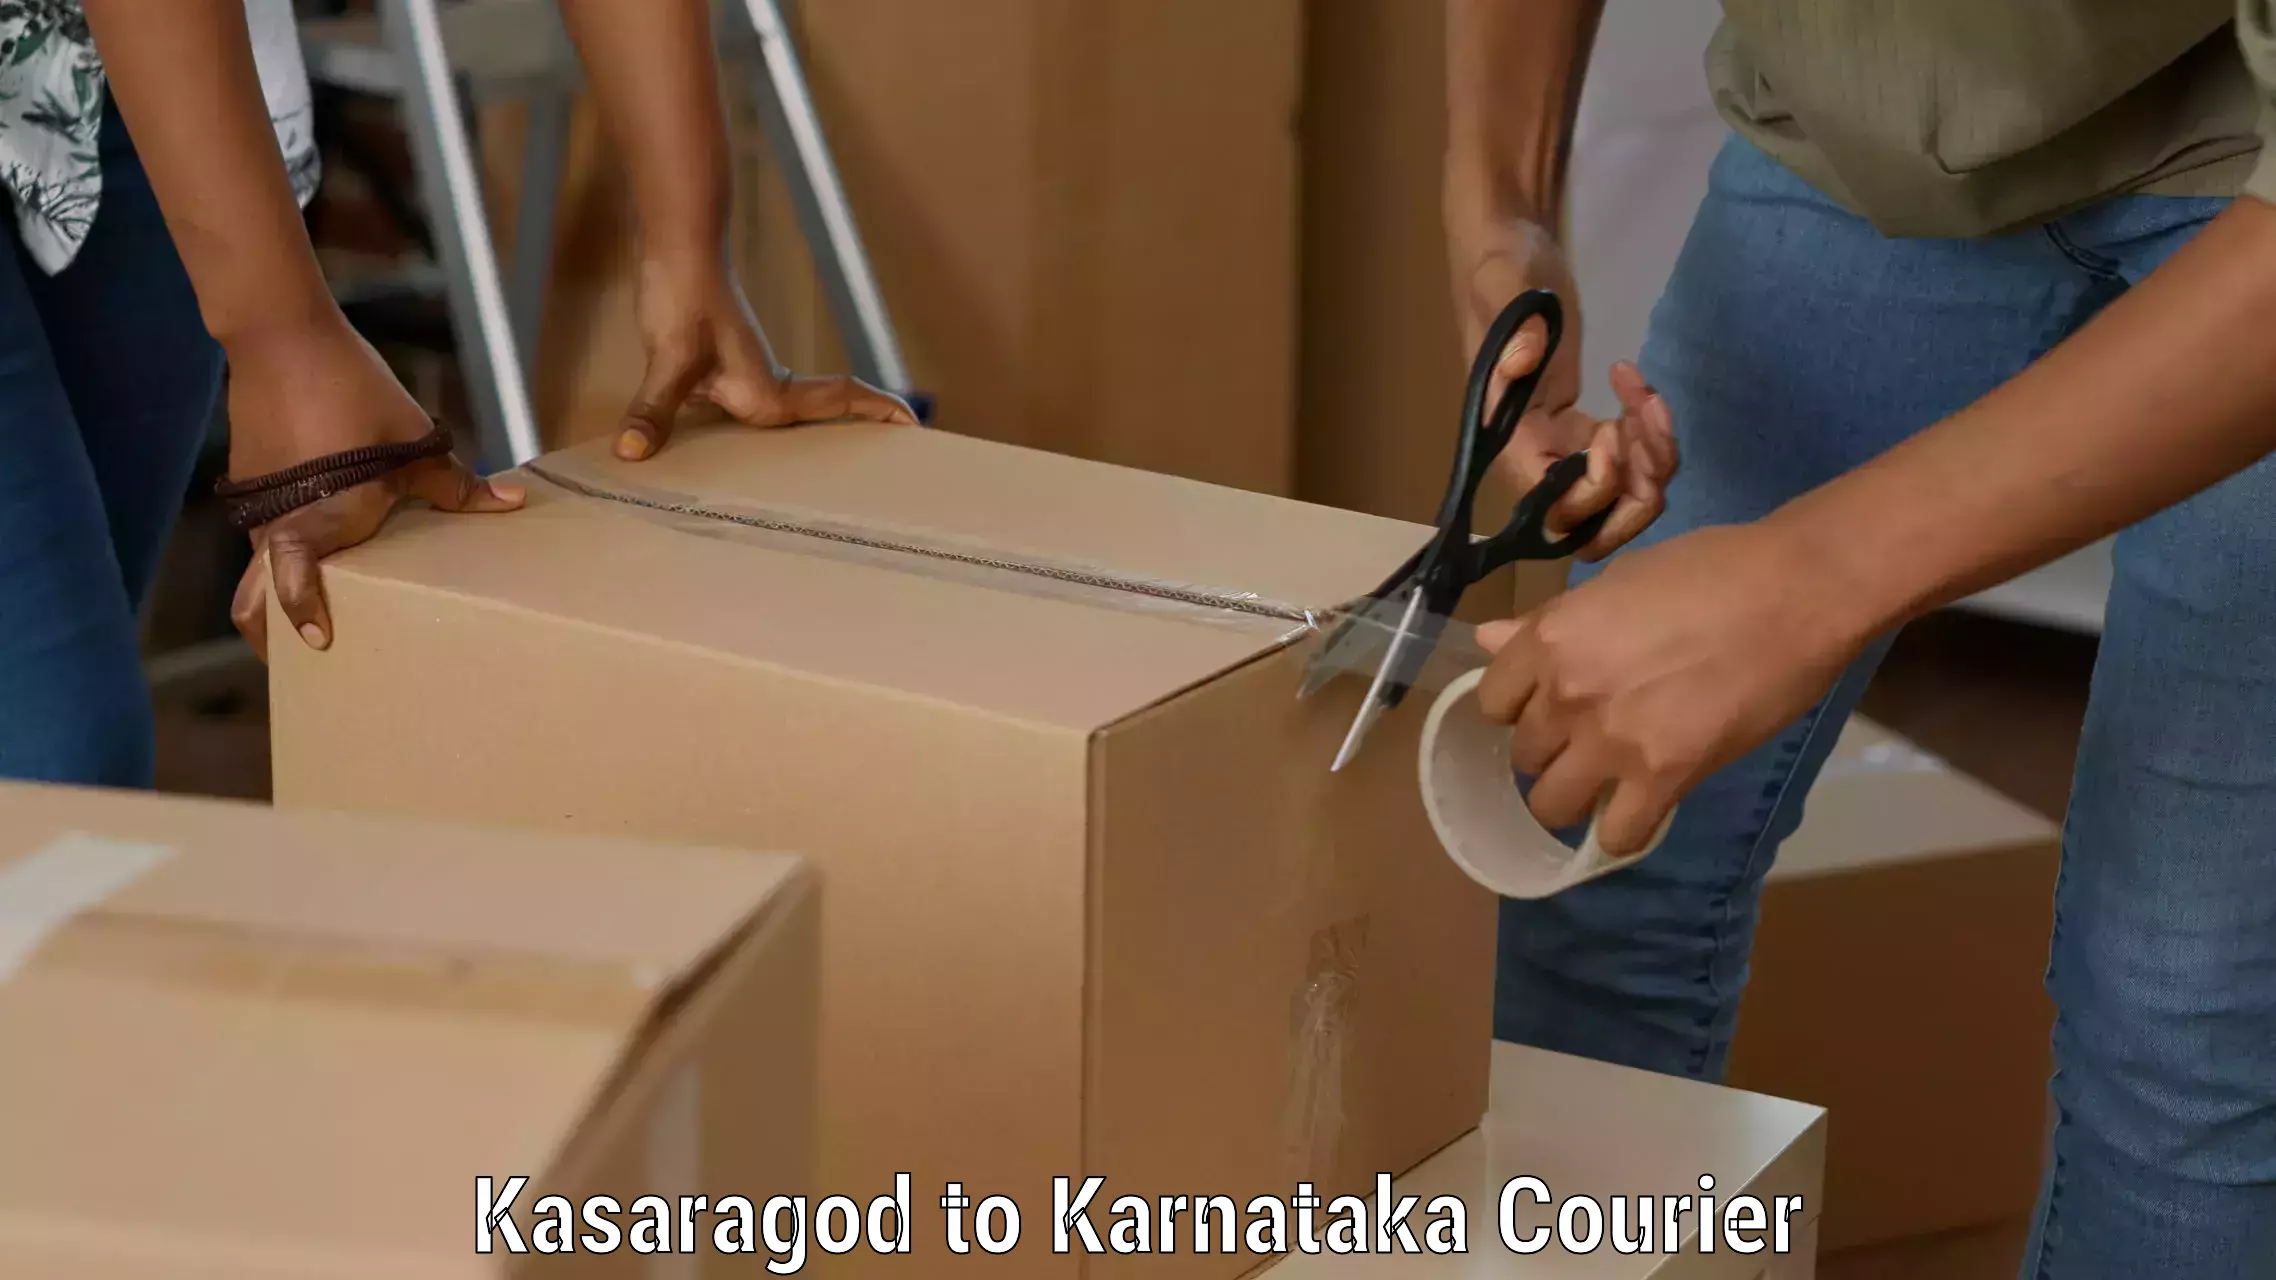 Delivery service partnership Kasaragod to Ramanathapura